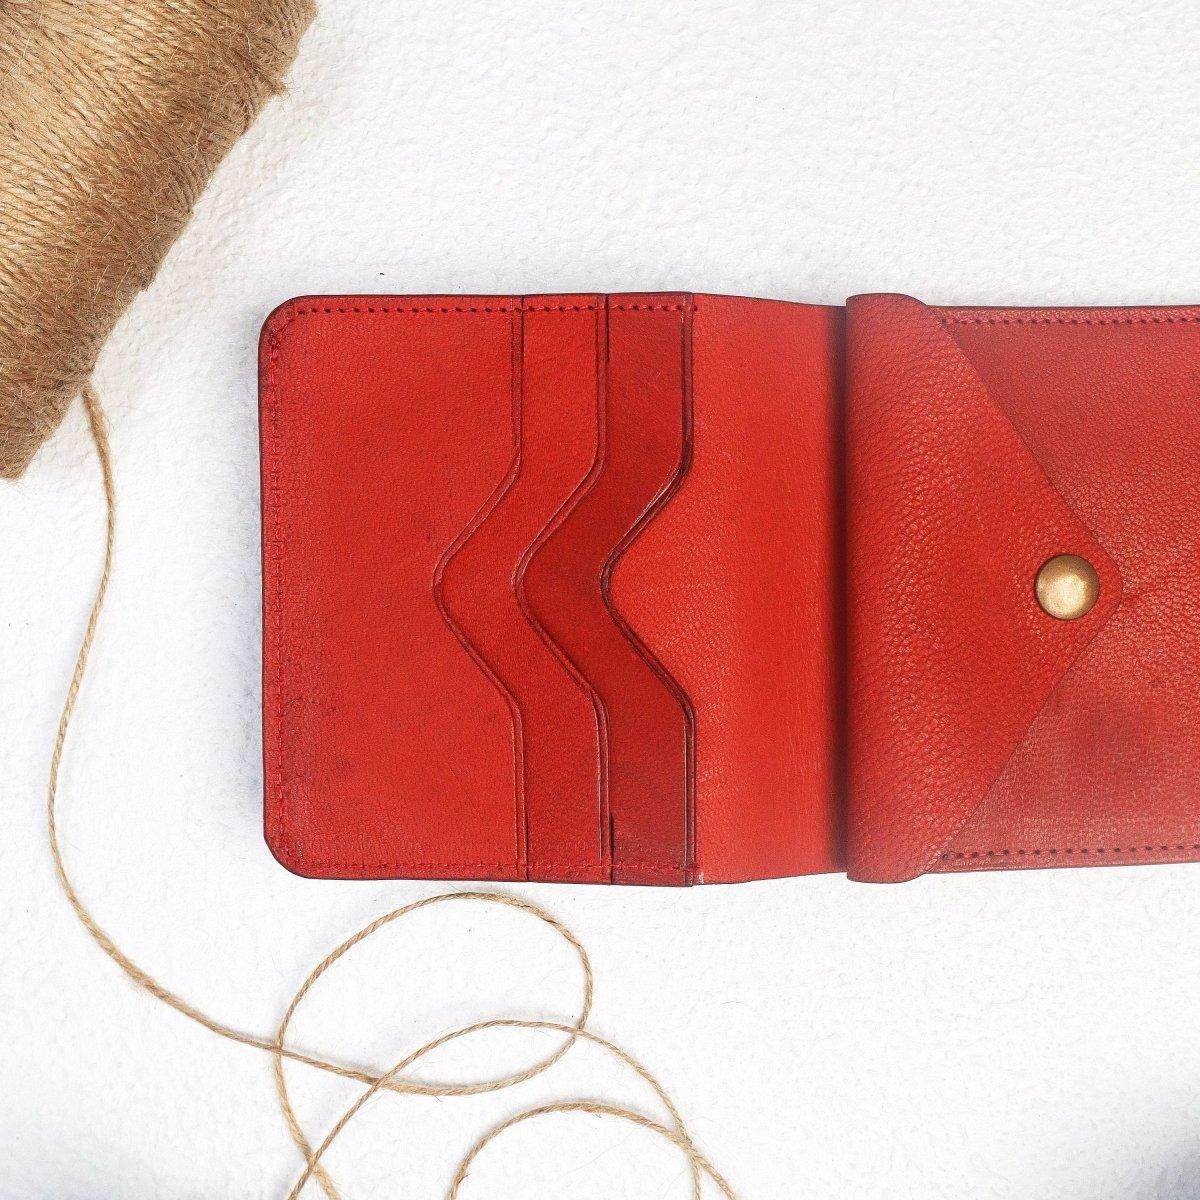 Iris - Black & Red - Ceylon Leather Crafts